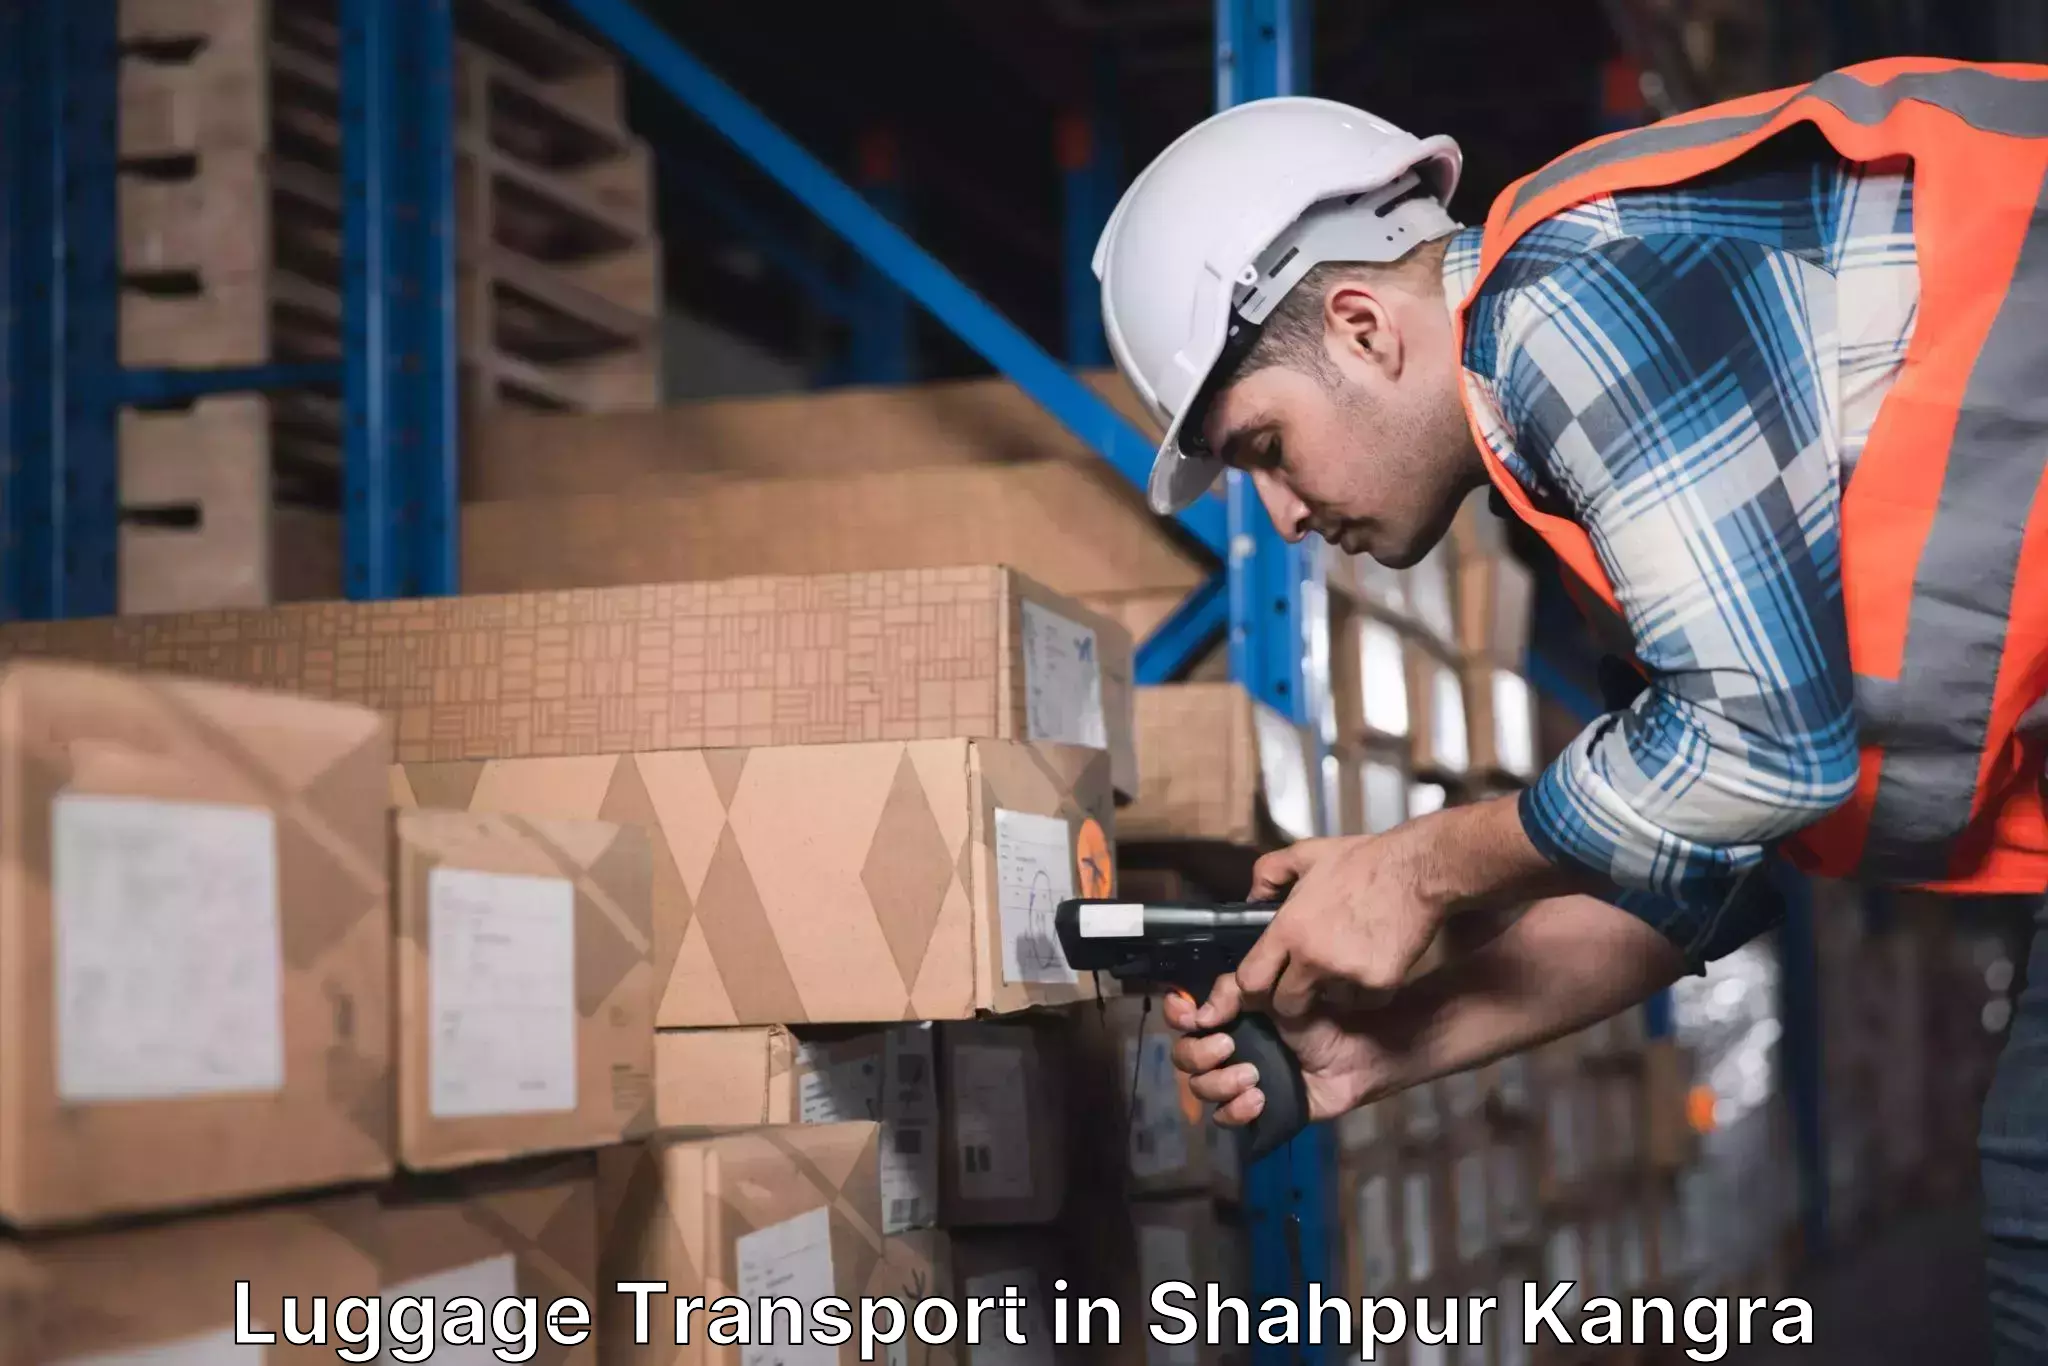 Luggage transport operations in Shahpur Kangra